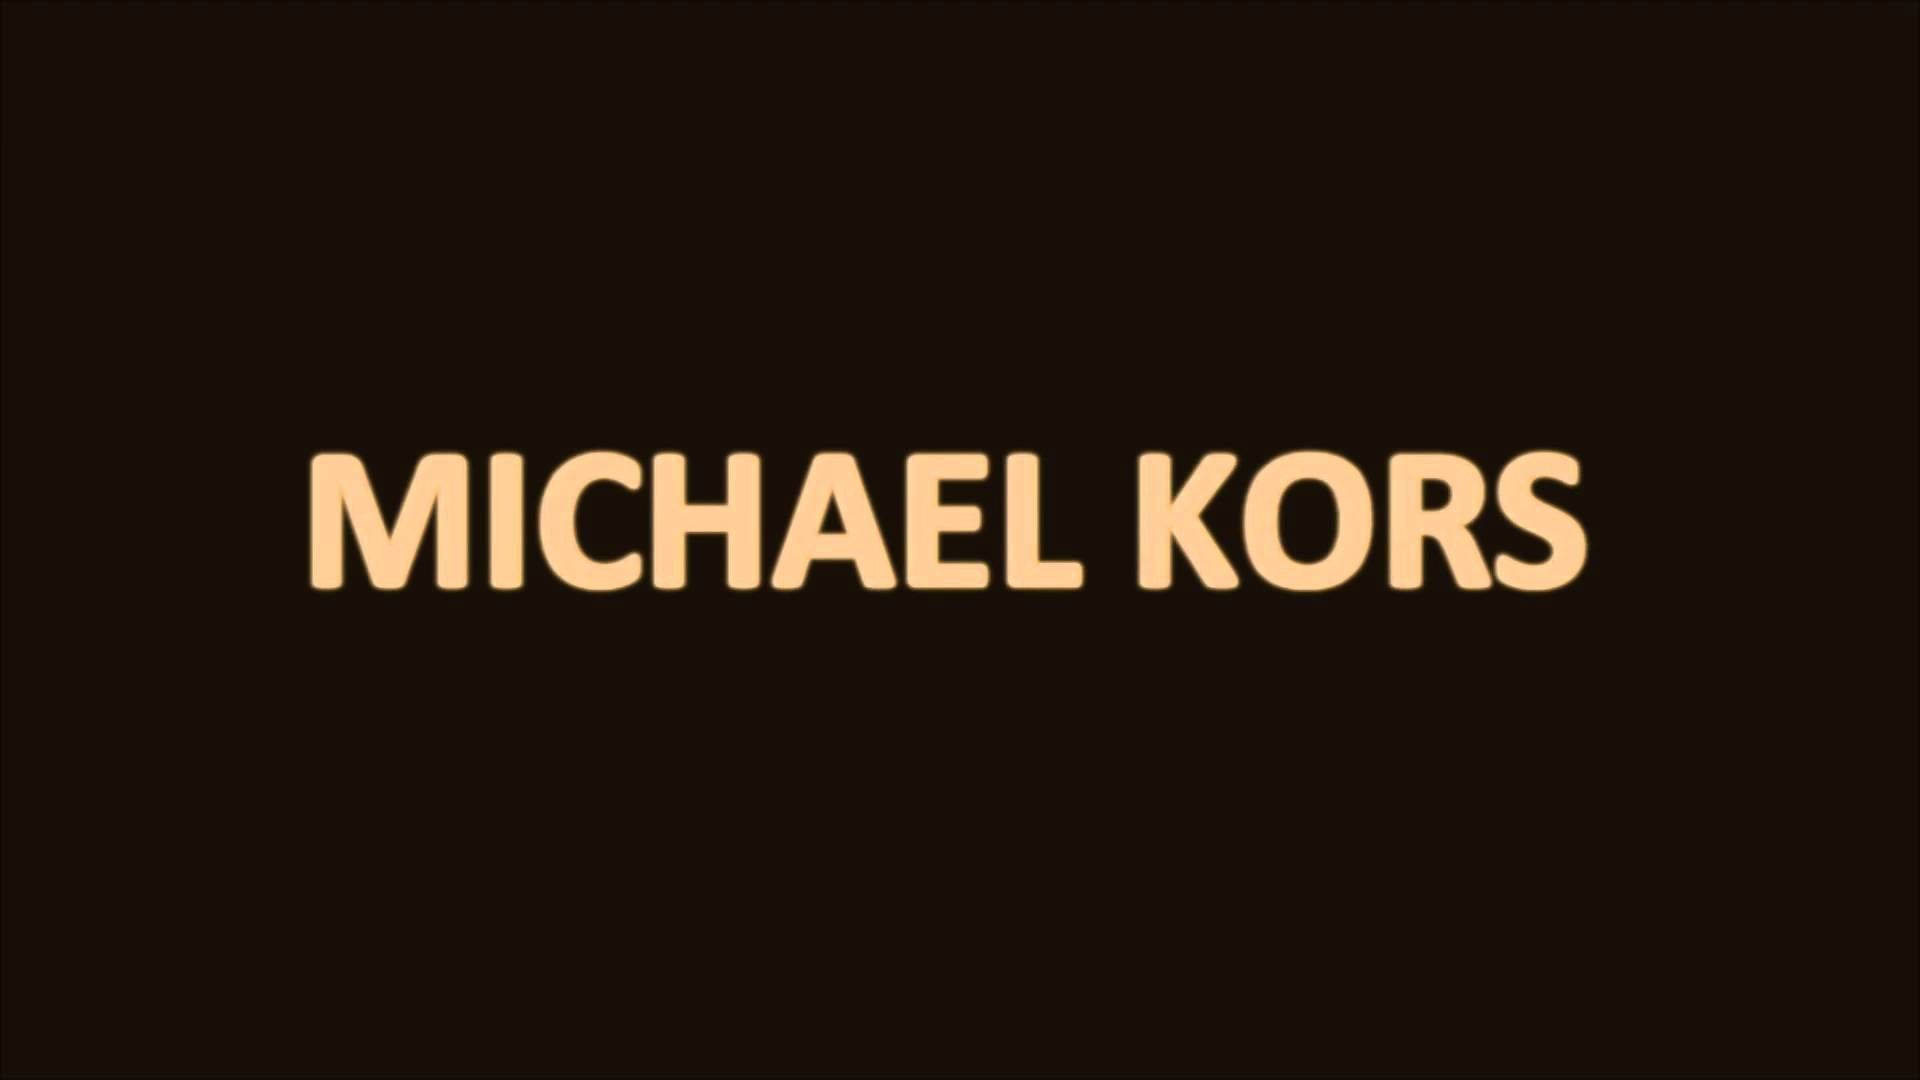 Michael Kors Minimalistic Poster